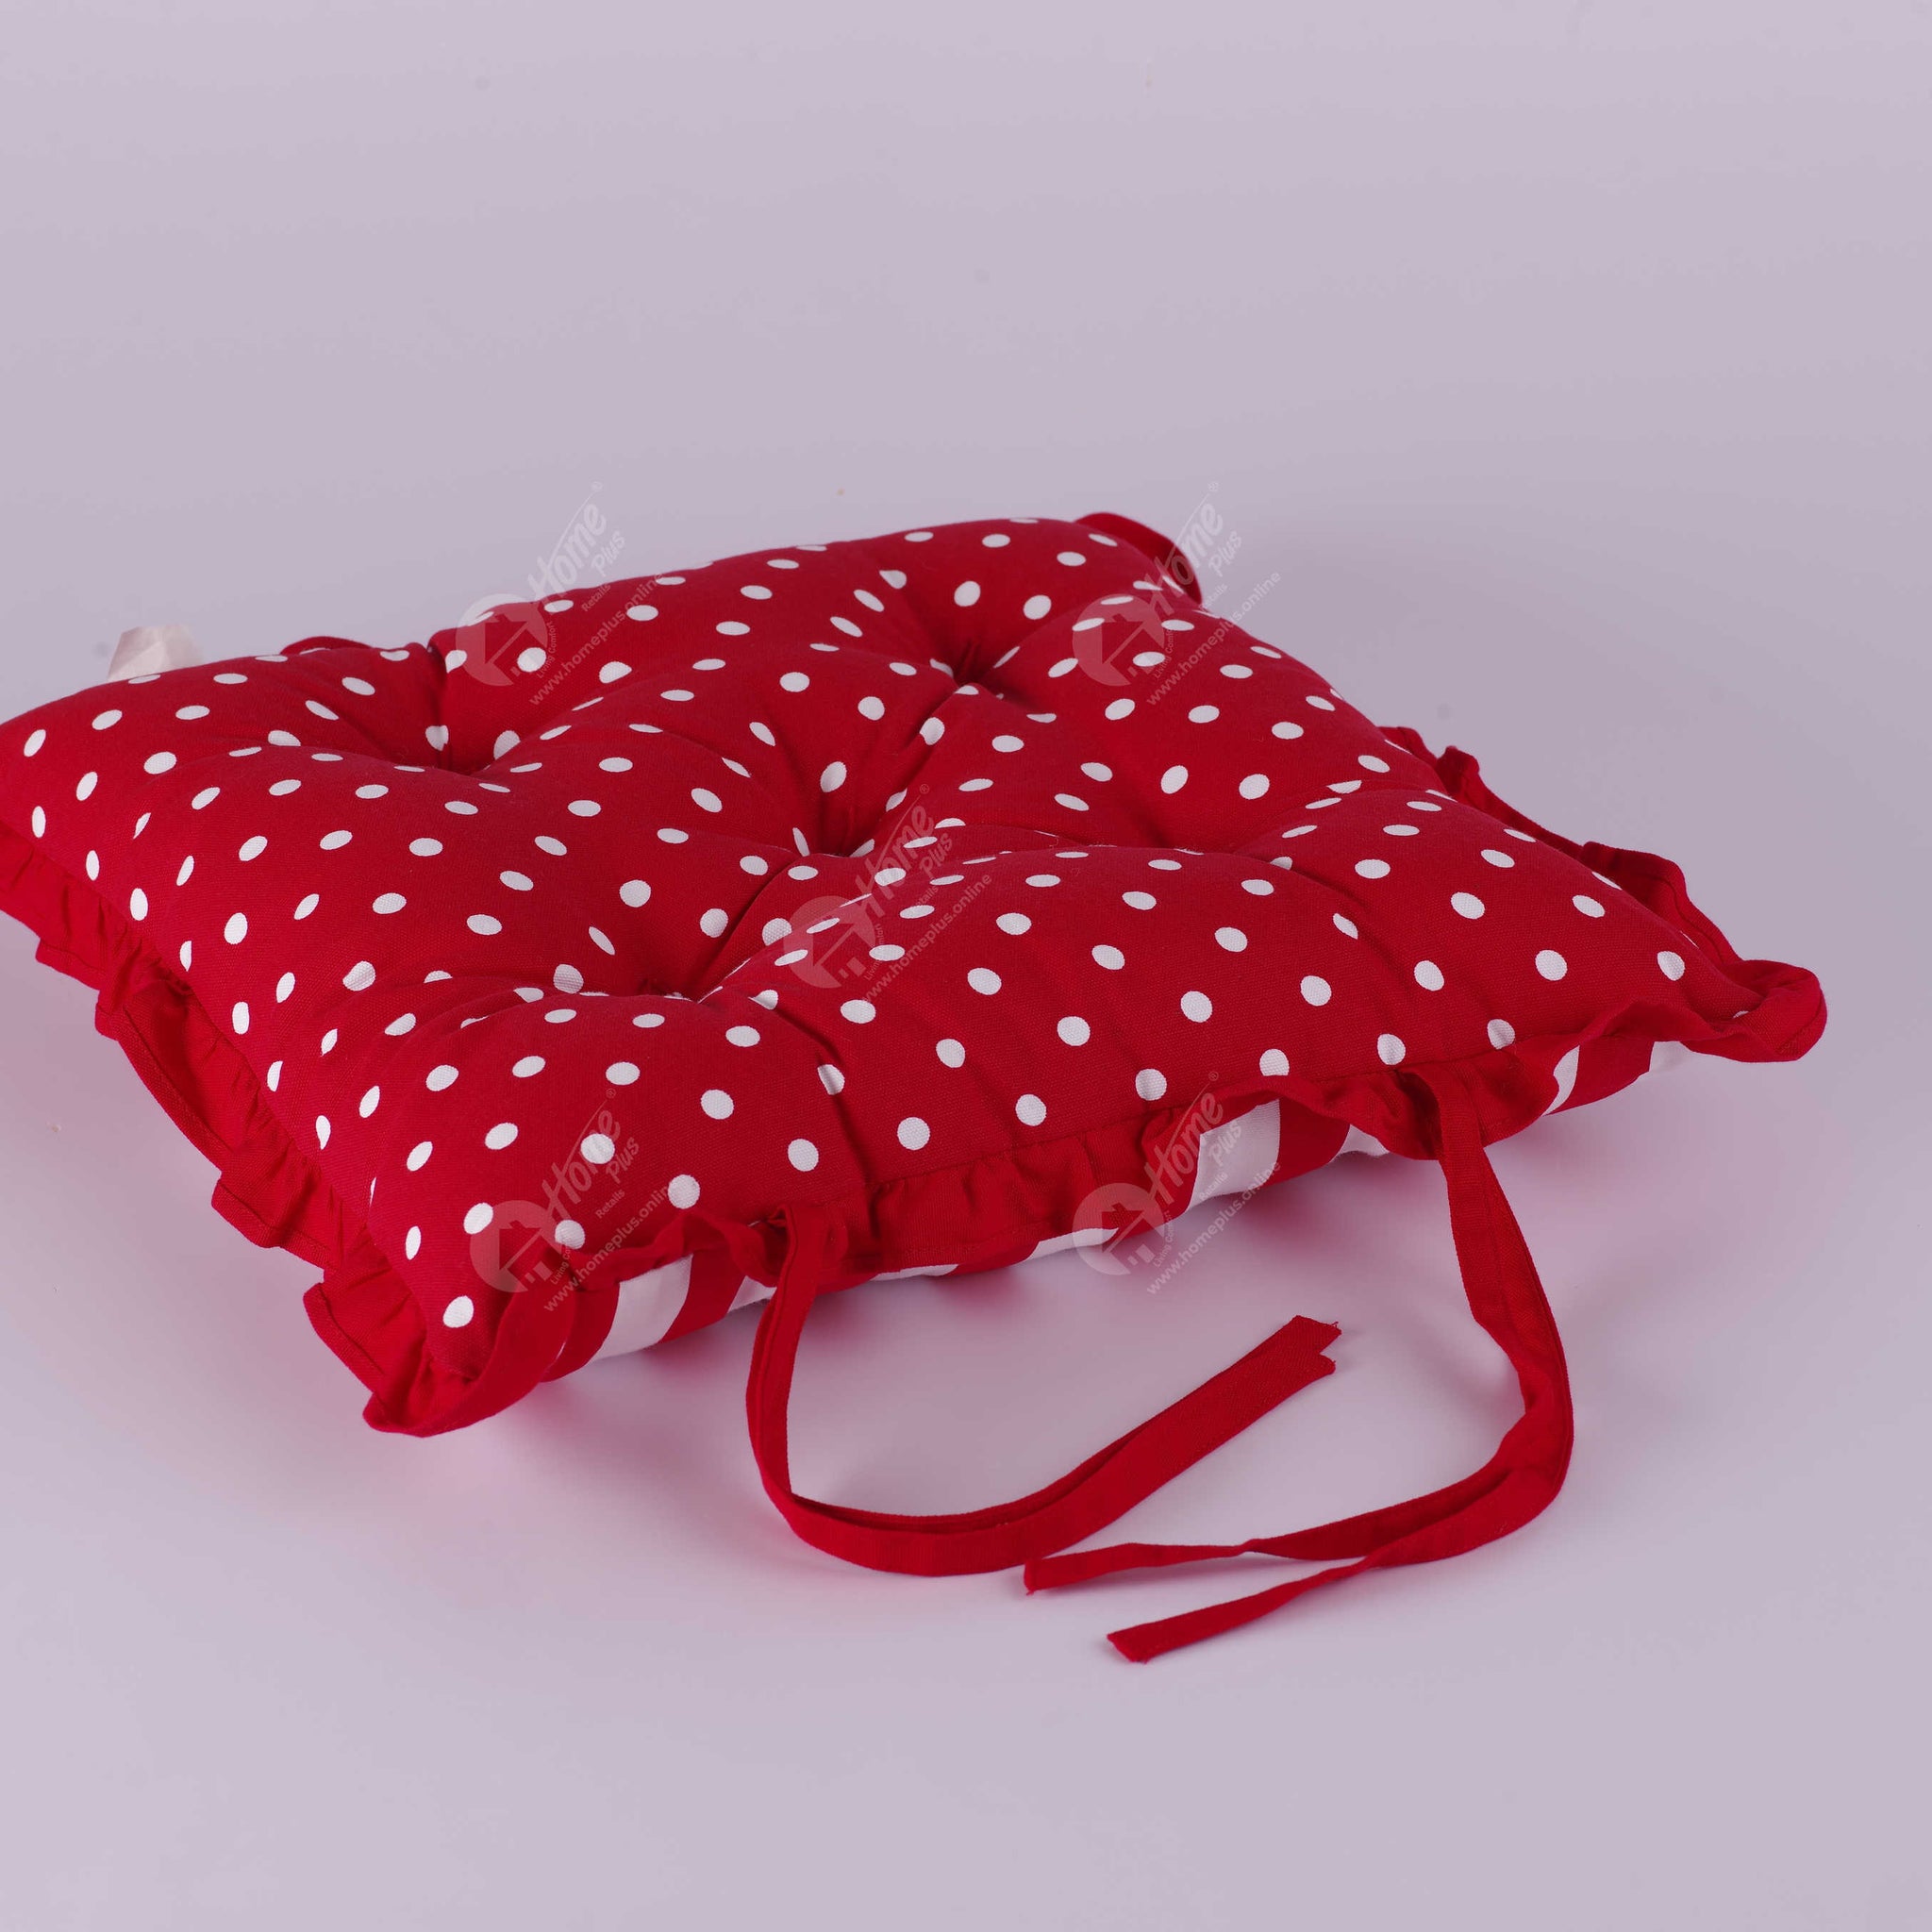 Frill Cushion - Polka Dot Red